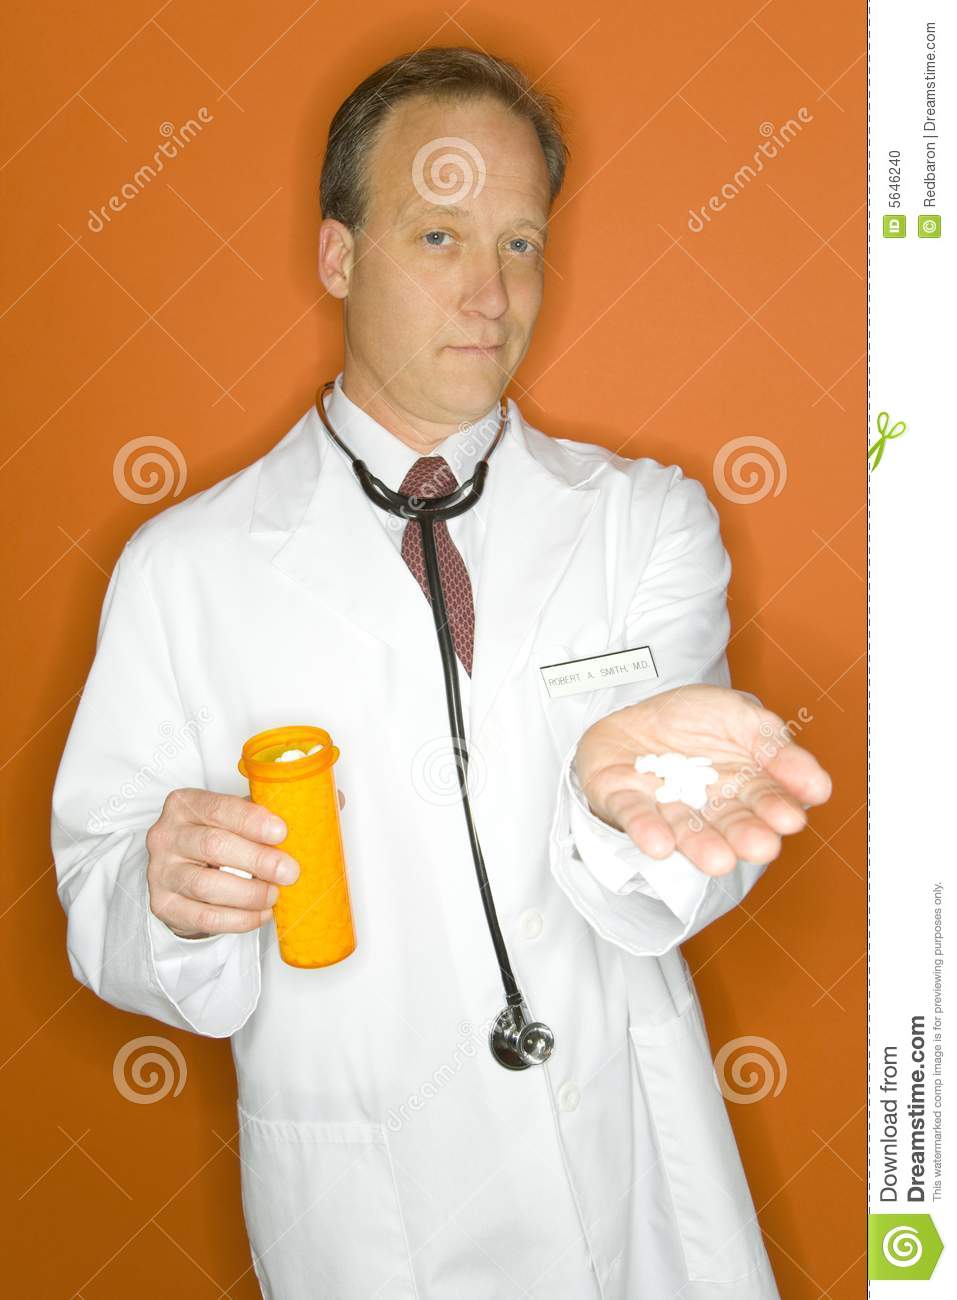 Portrait Of A Doctor Giving Medicine On An Orange Background 